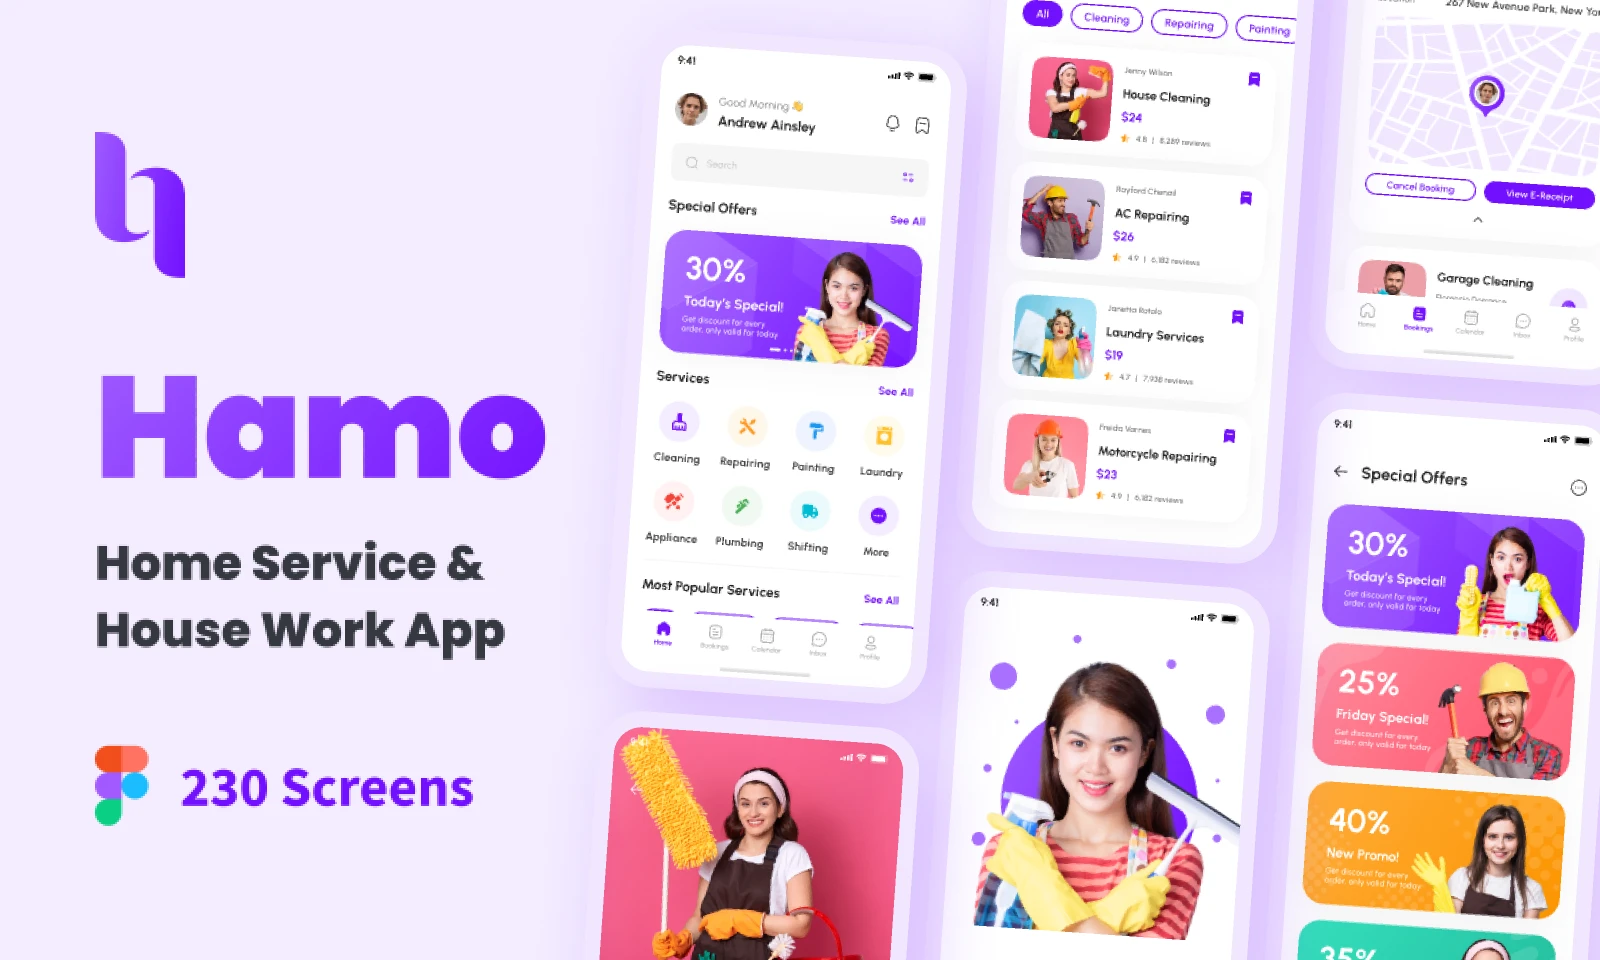 Hamo - Home Service & House Work App UI Kit for Figma and Adobe XD